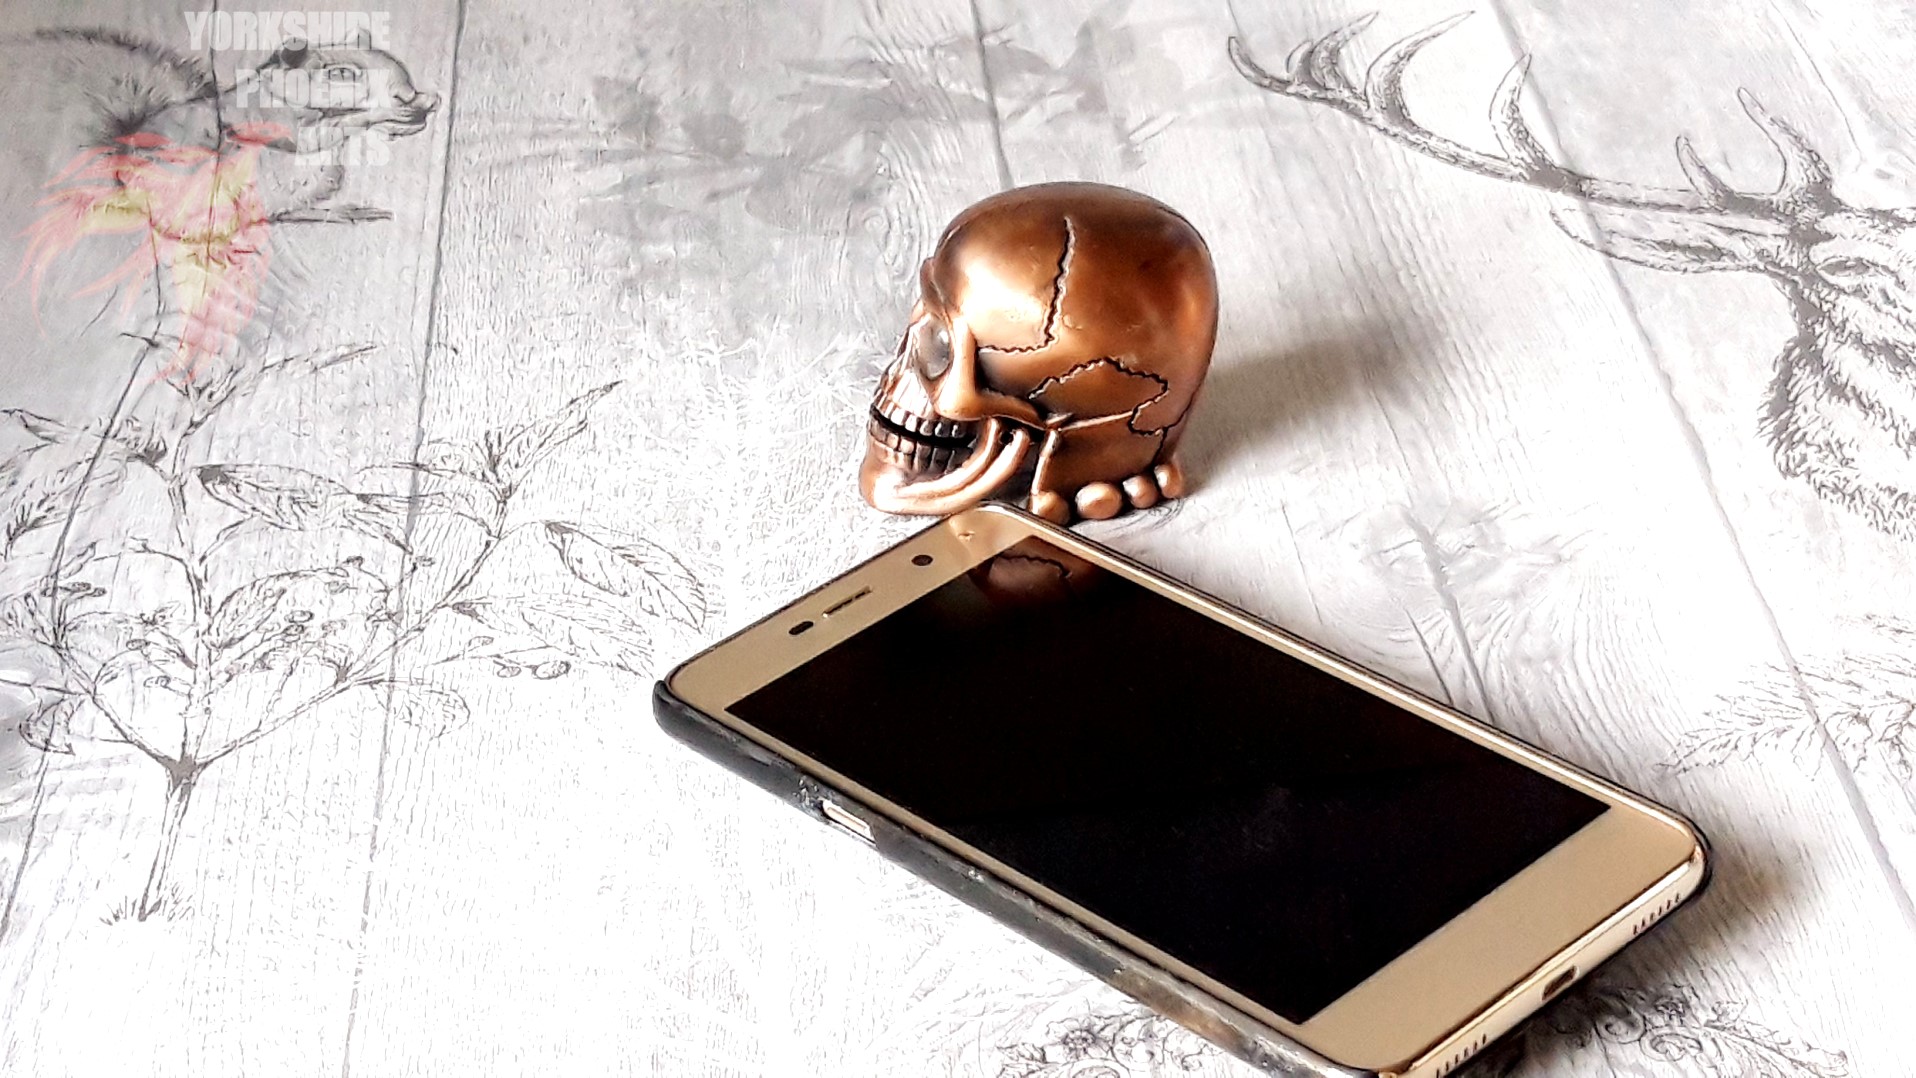 Steampunk 3D Phone Cover